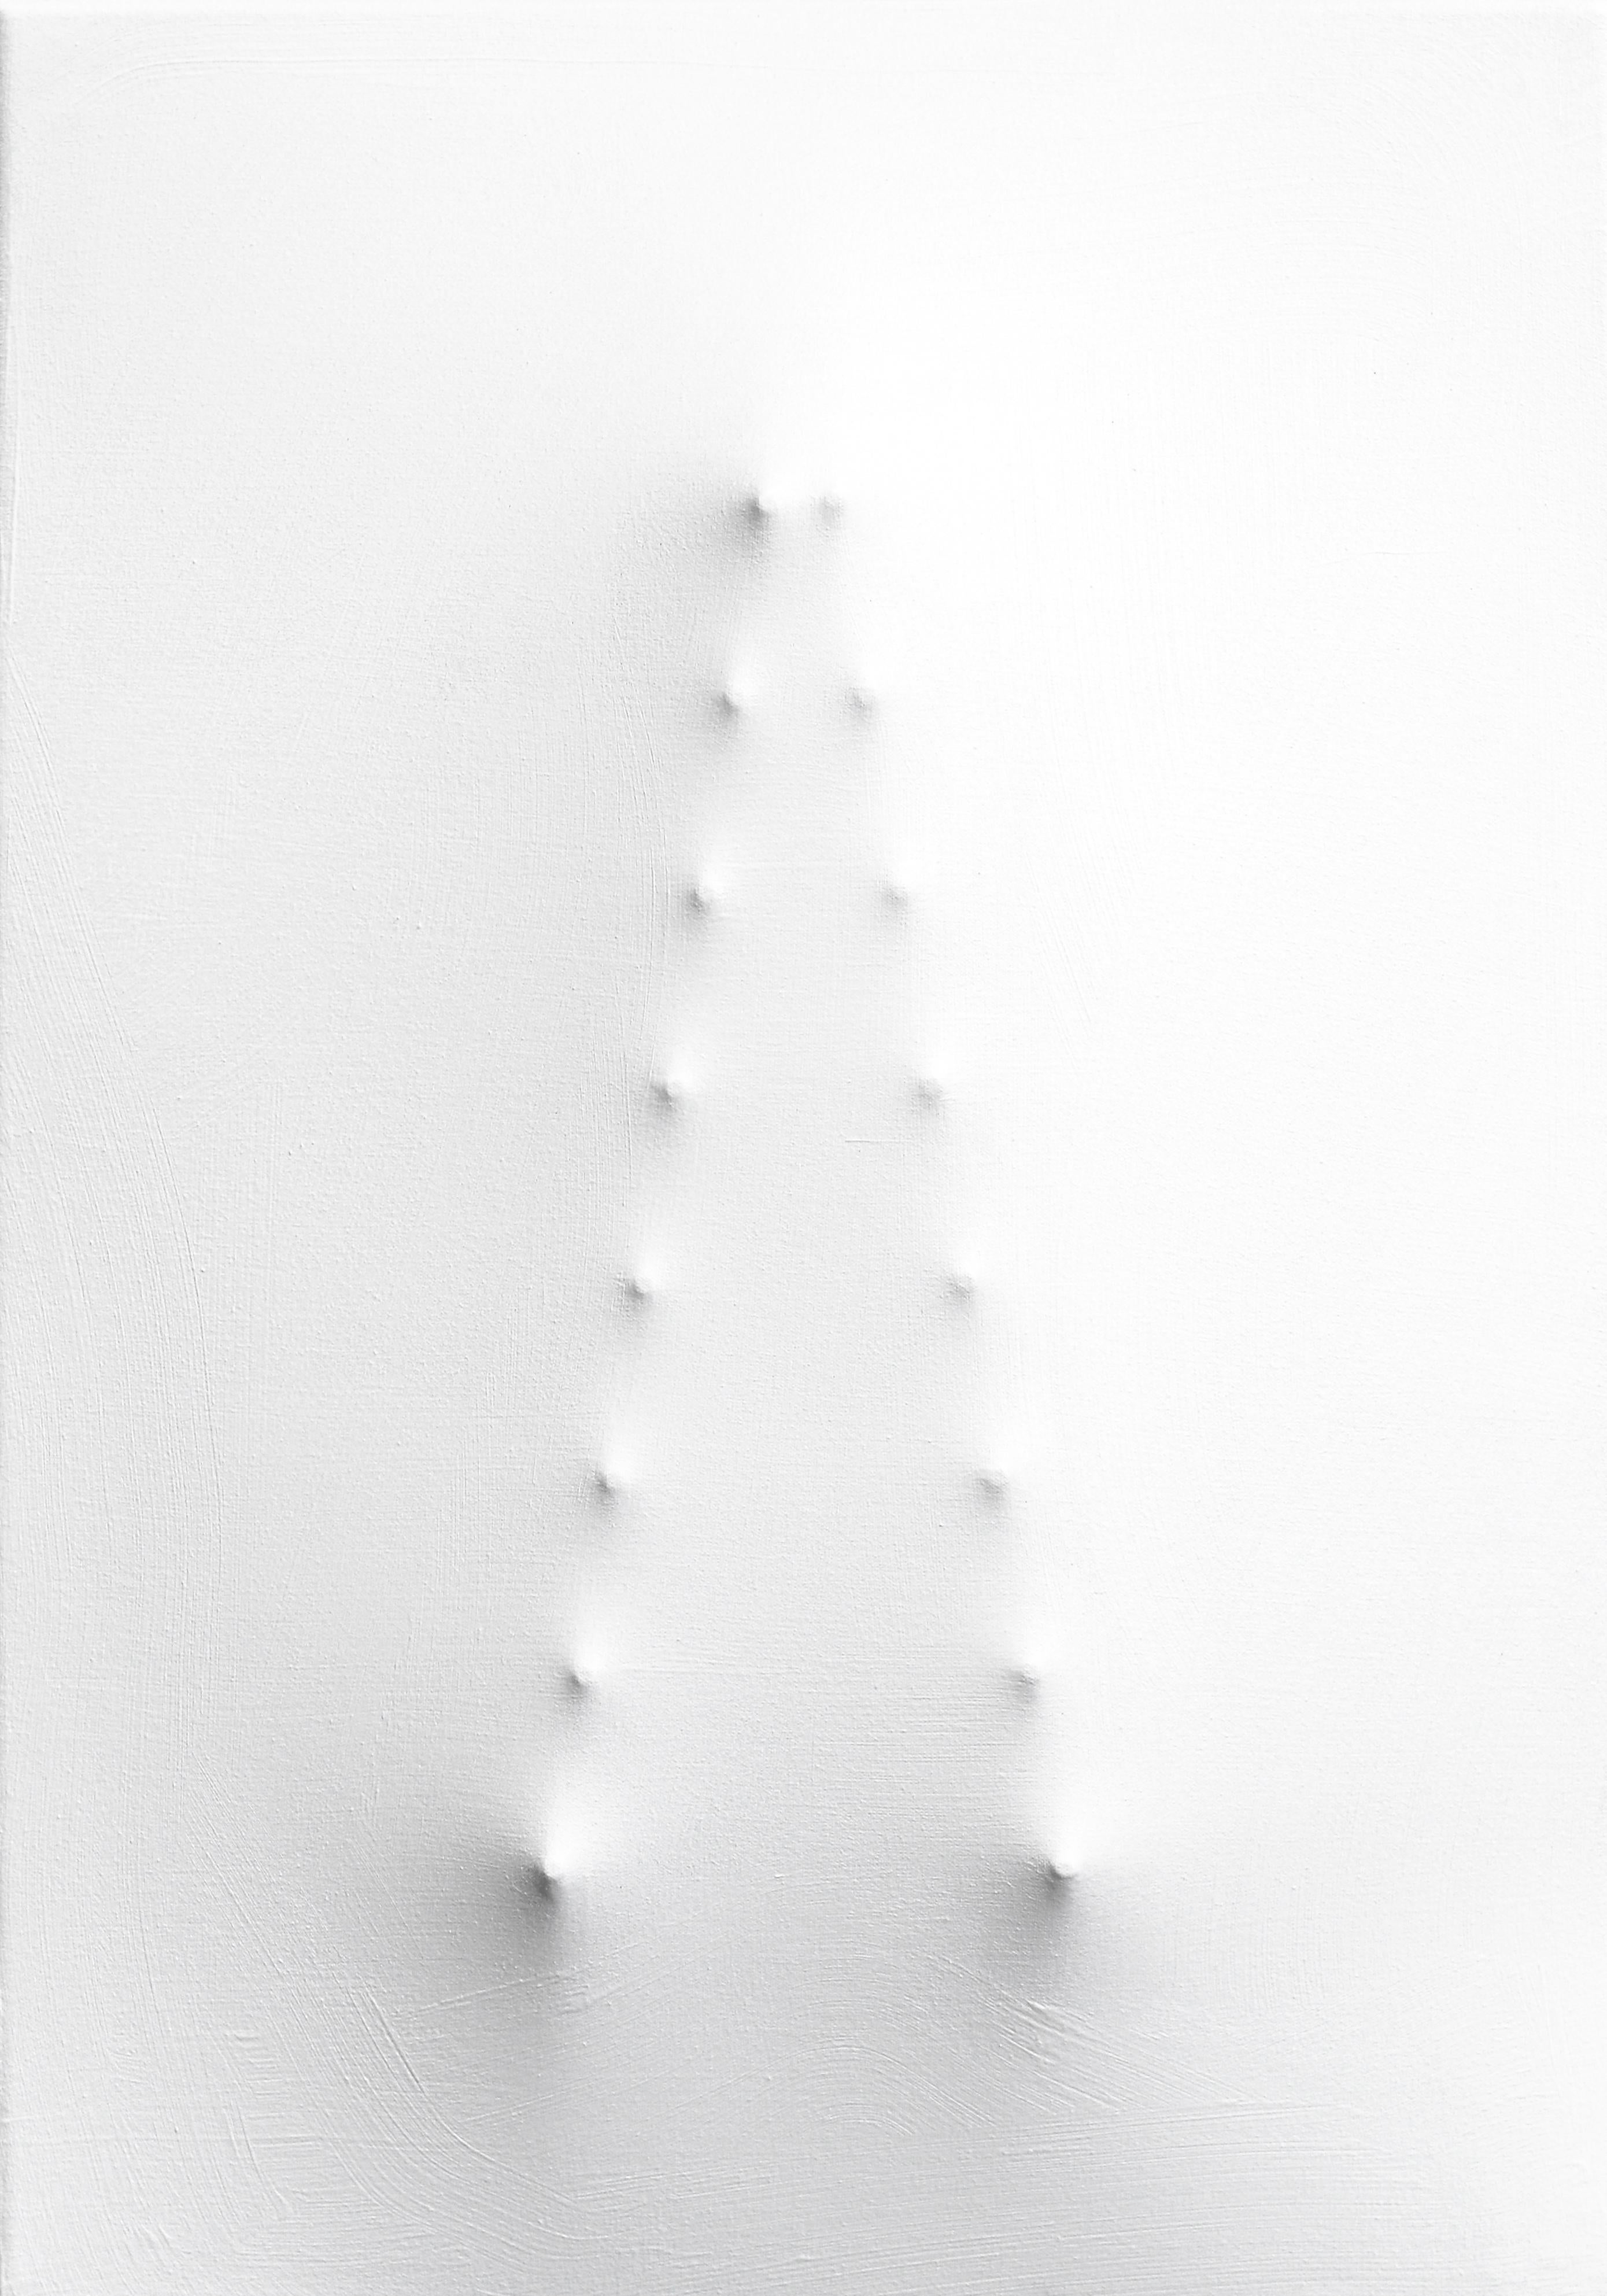 Ritual Object Pause - Original Abstract Minimalist Sculptural Artwork - Mixed Media Art by Len Klikunas